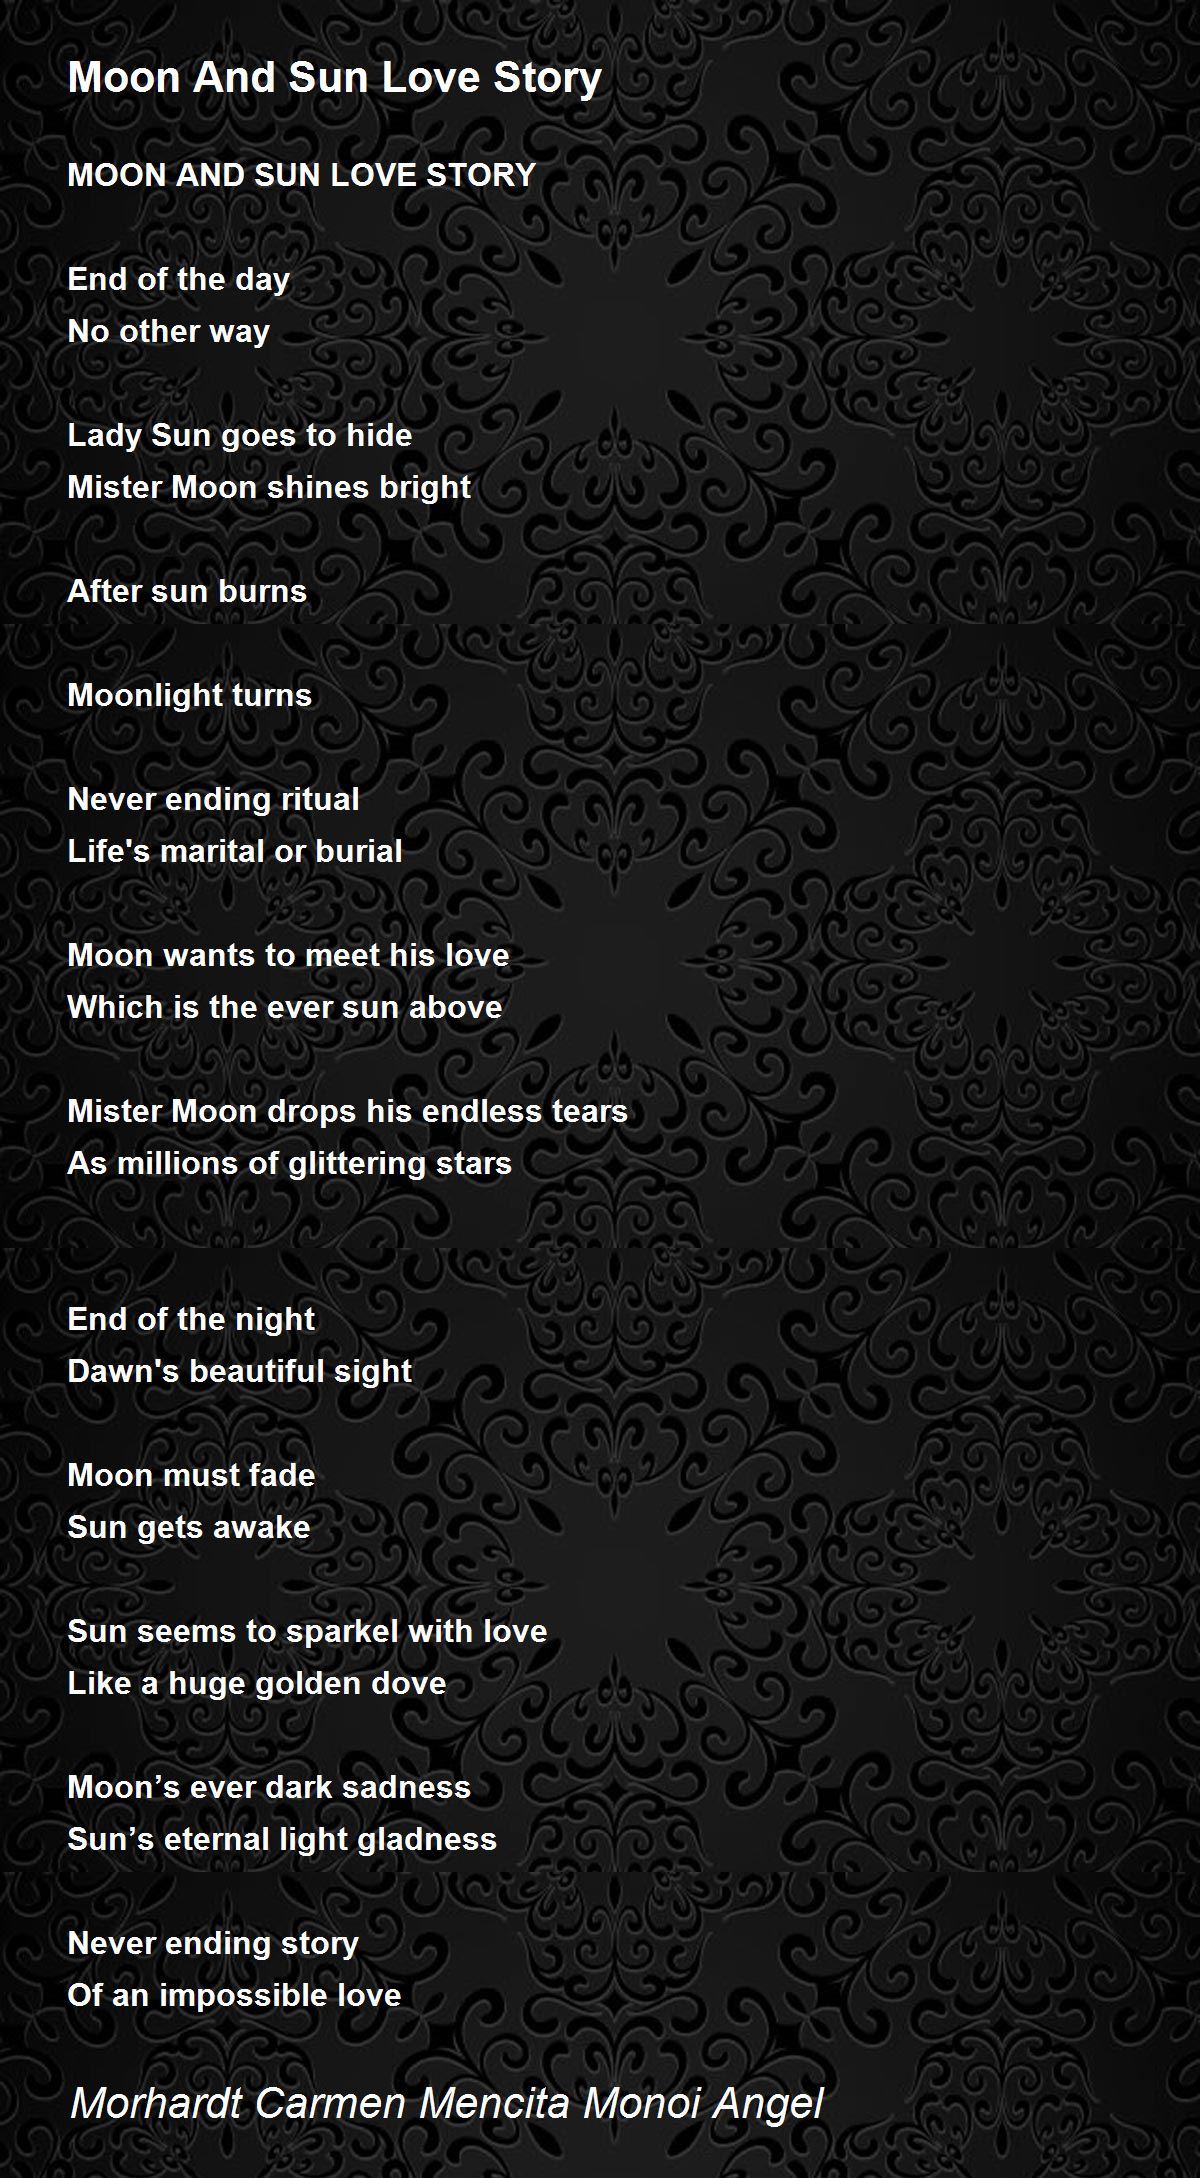 Moon And Sun Love Story by Morhardt Carmen Mencita Monoi Angel - Moon